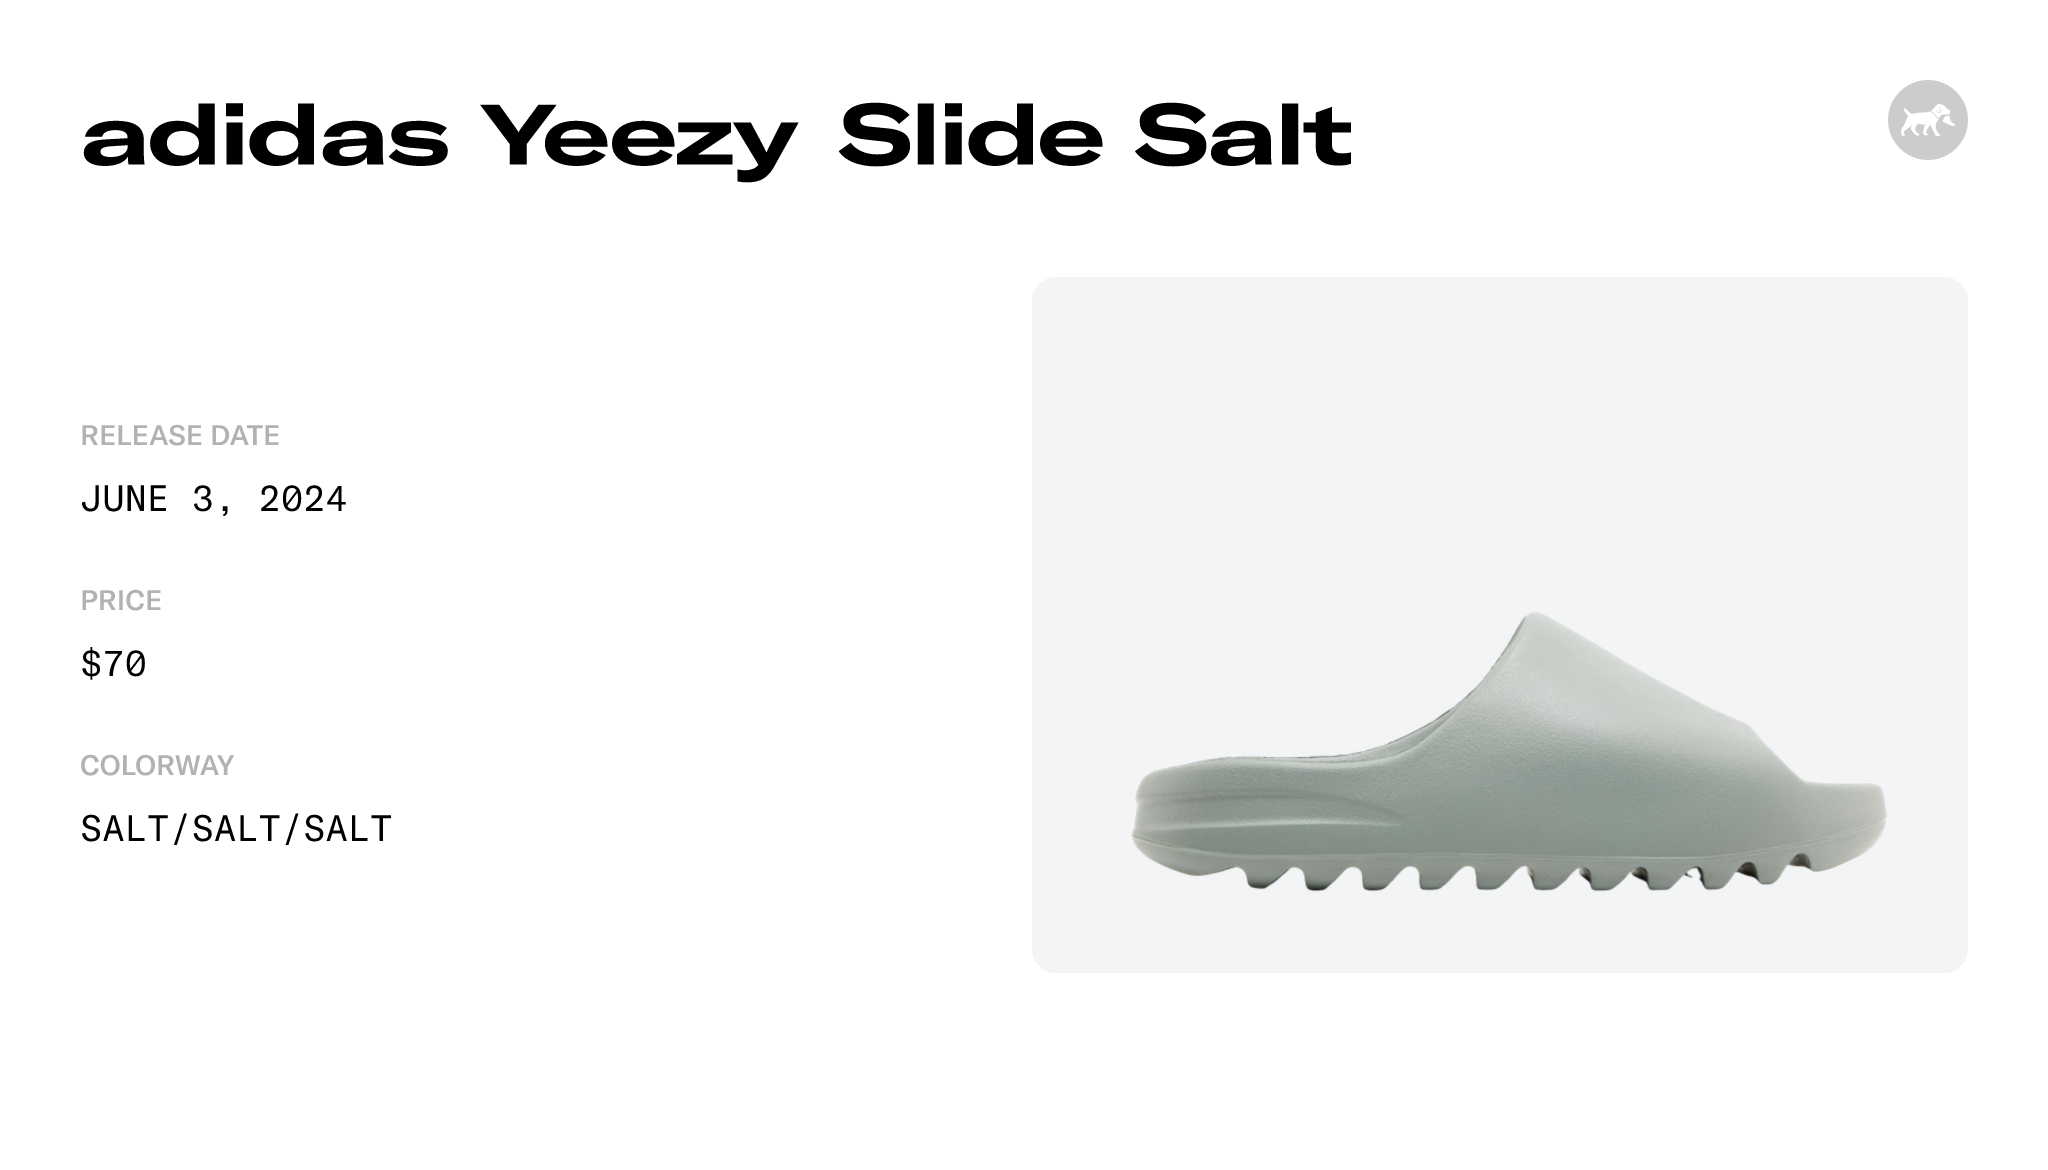 adidas Yeezy Slide Salt - ID5480 Raffles and Release Date